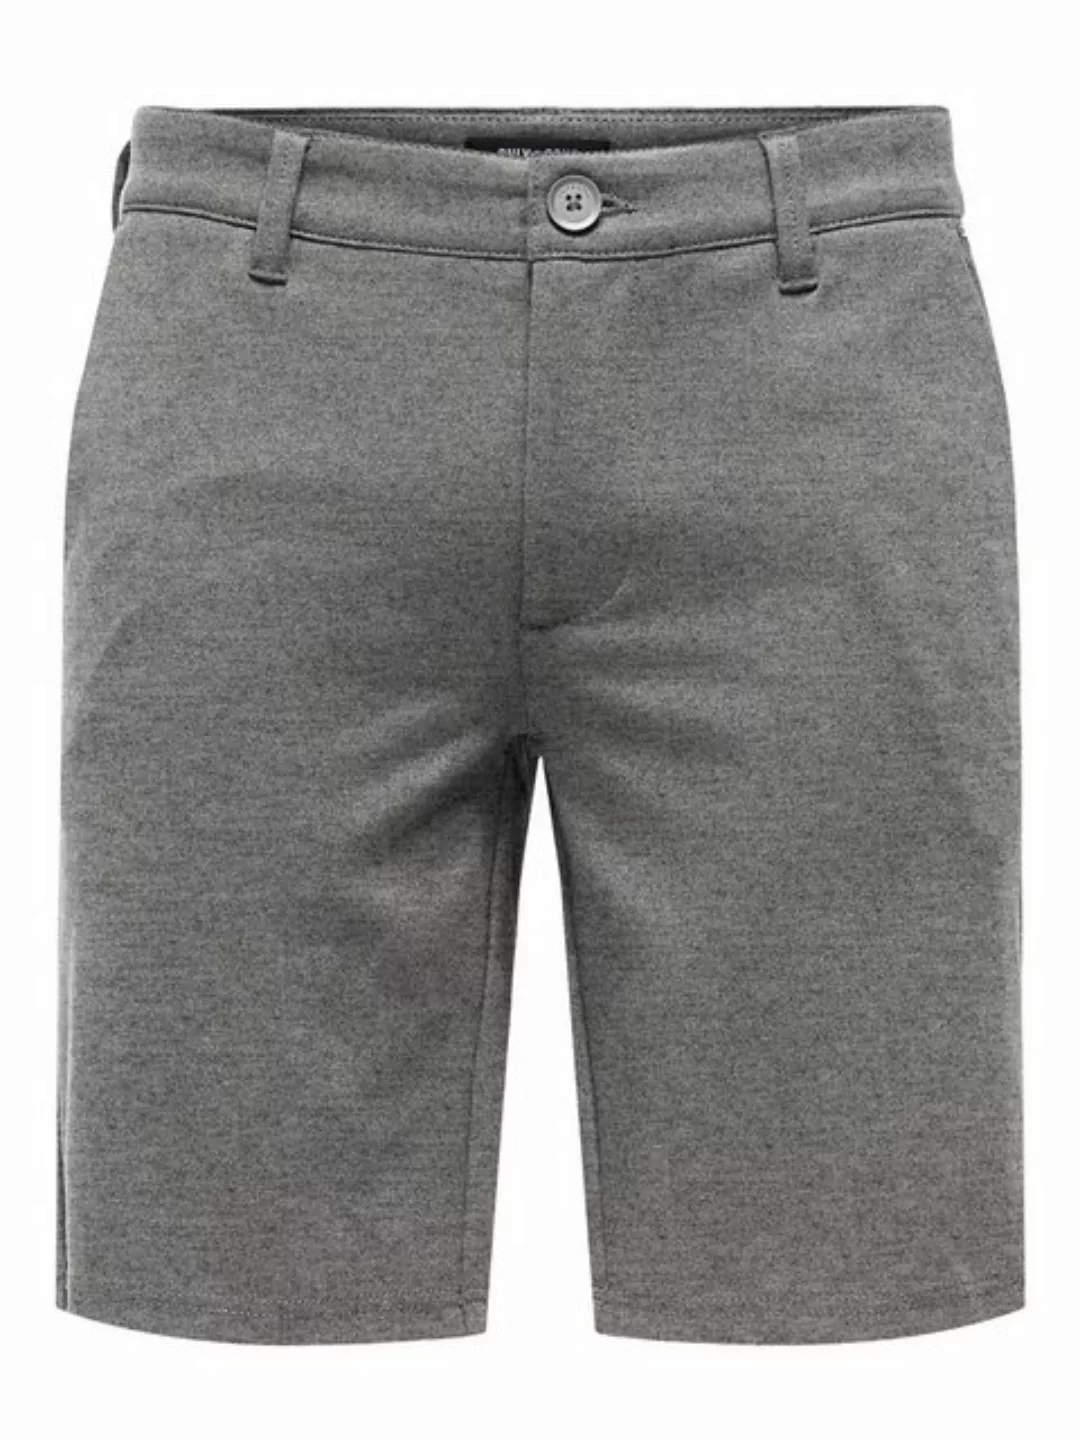 ONLY & SONS Chinoshorts Shorts Bermuda Pants Sommer Hose 7413 in Grau günstig online kaufen